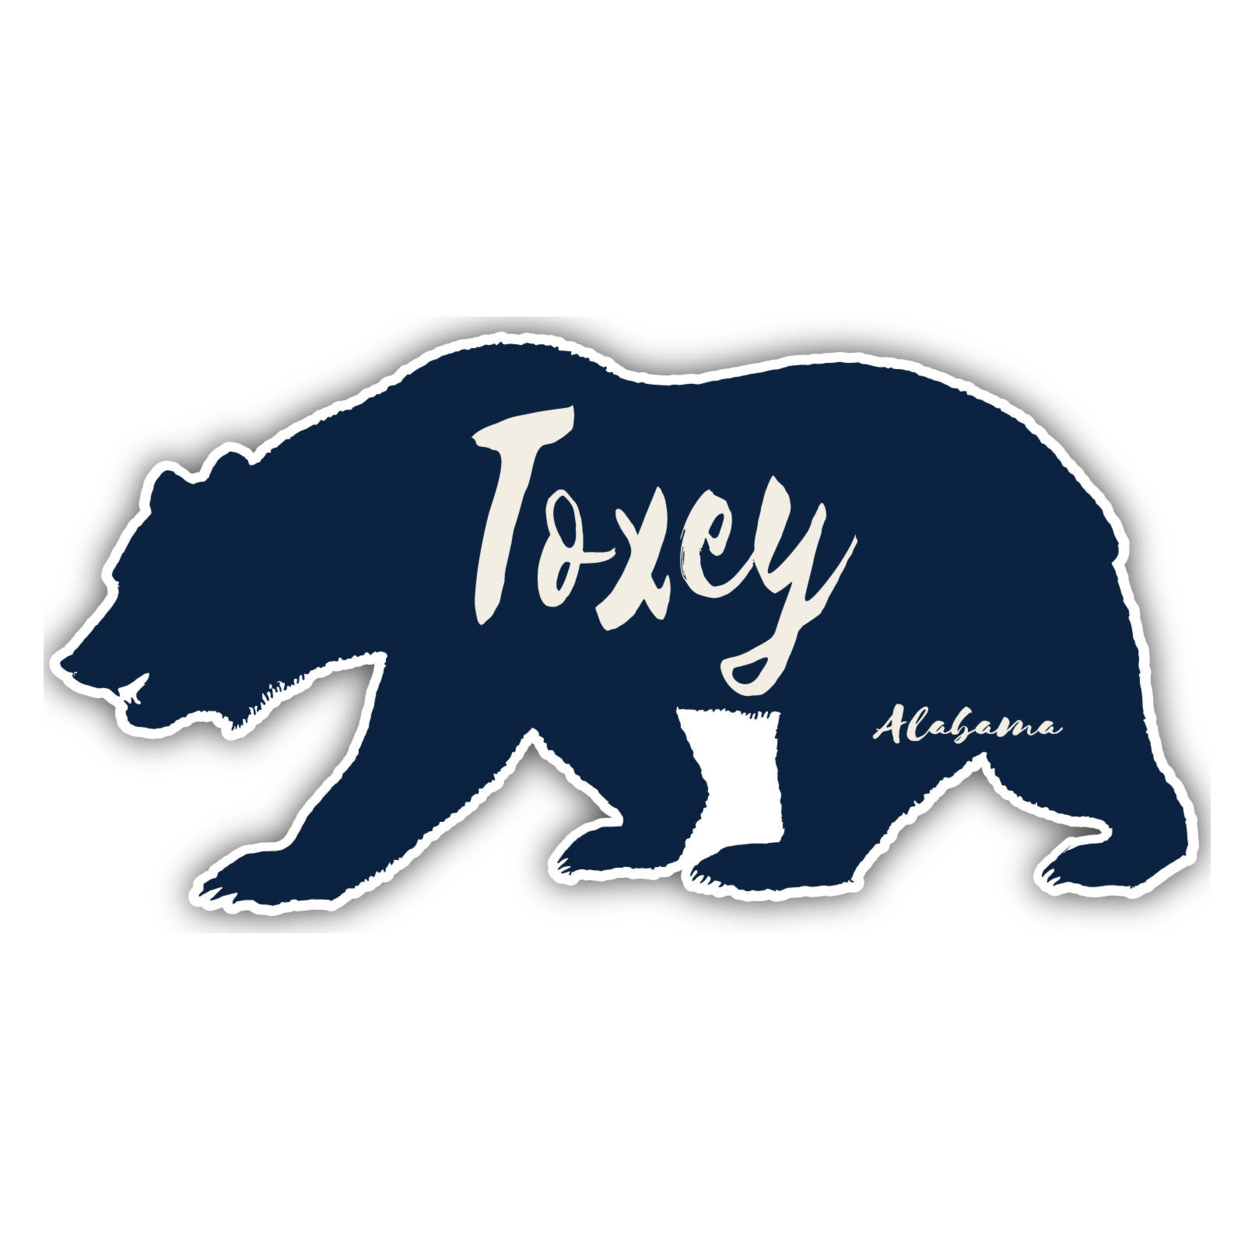 Toxey Alabama Souvenir Decorative Stickers (Choose Theme And Size) - Single Unit, 2-Inch, Bear